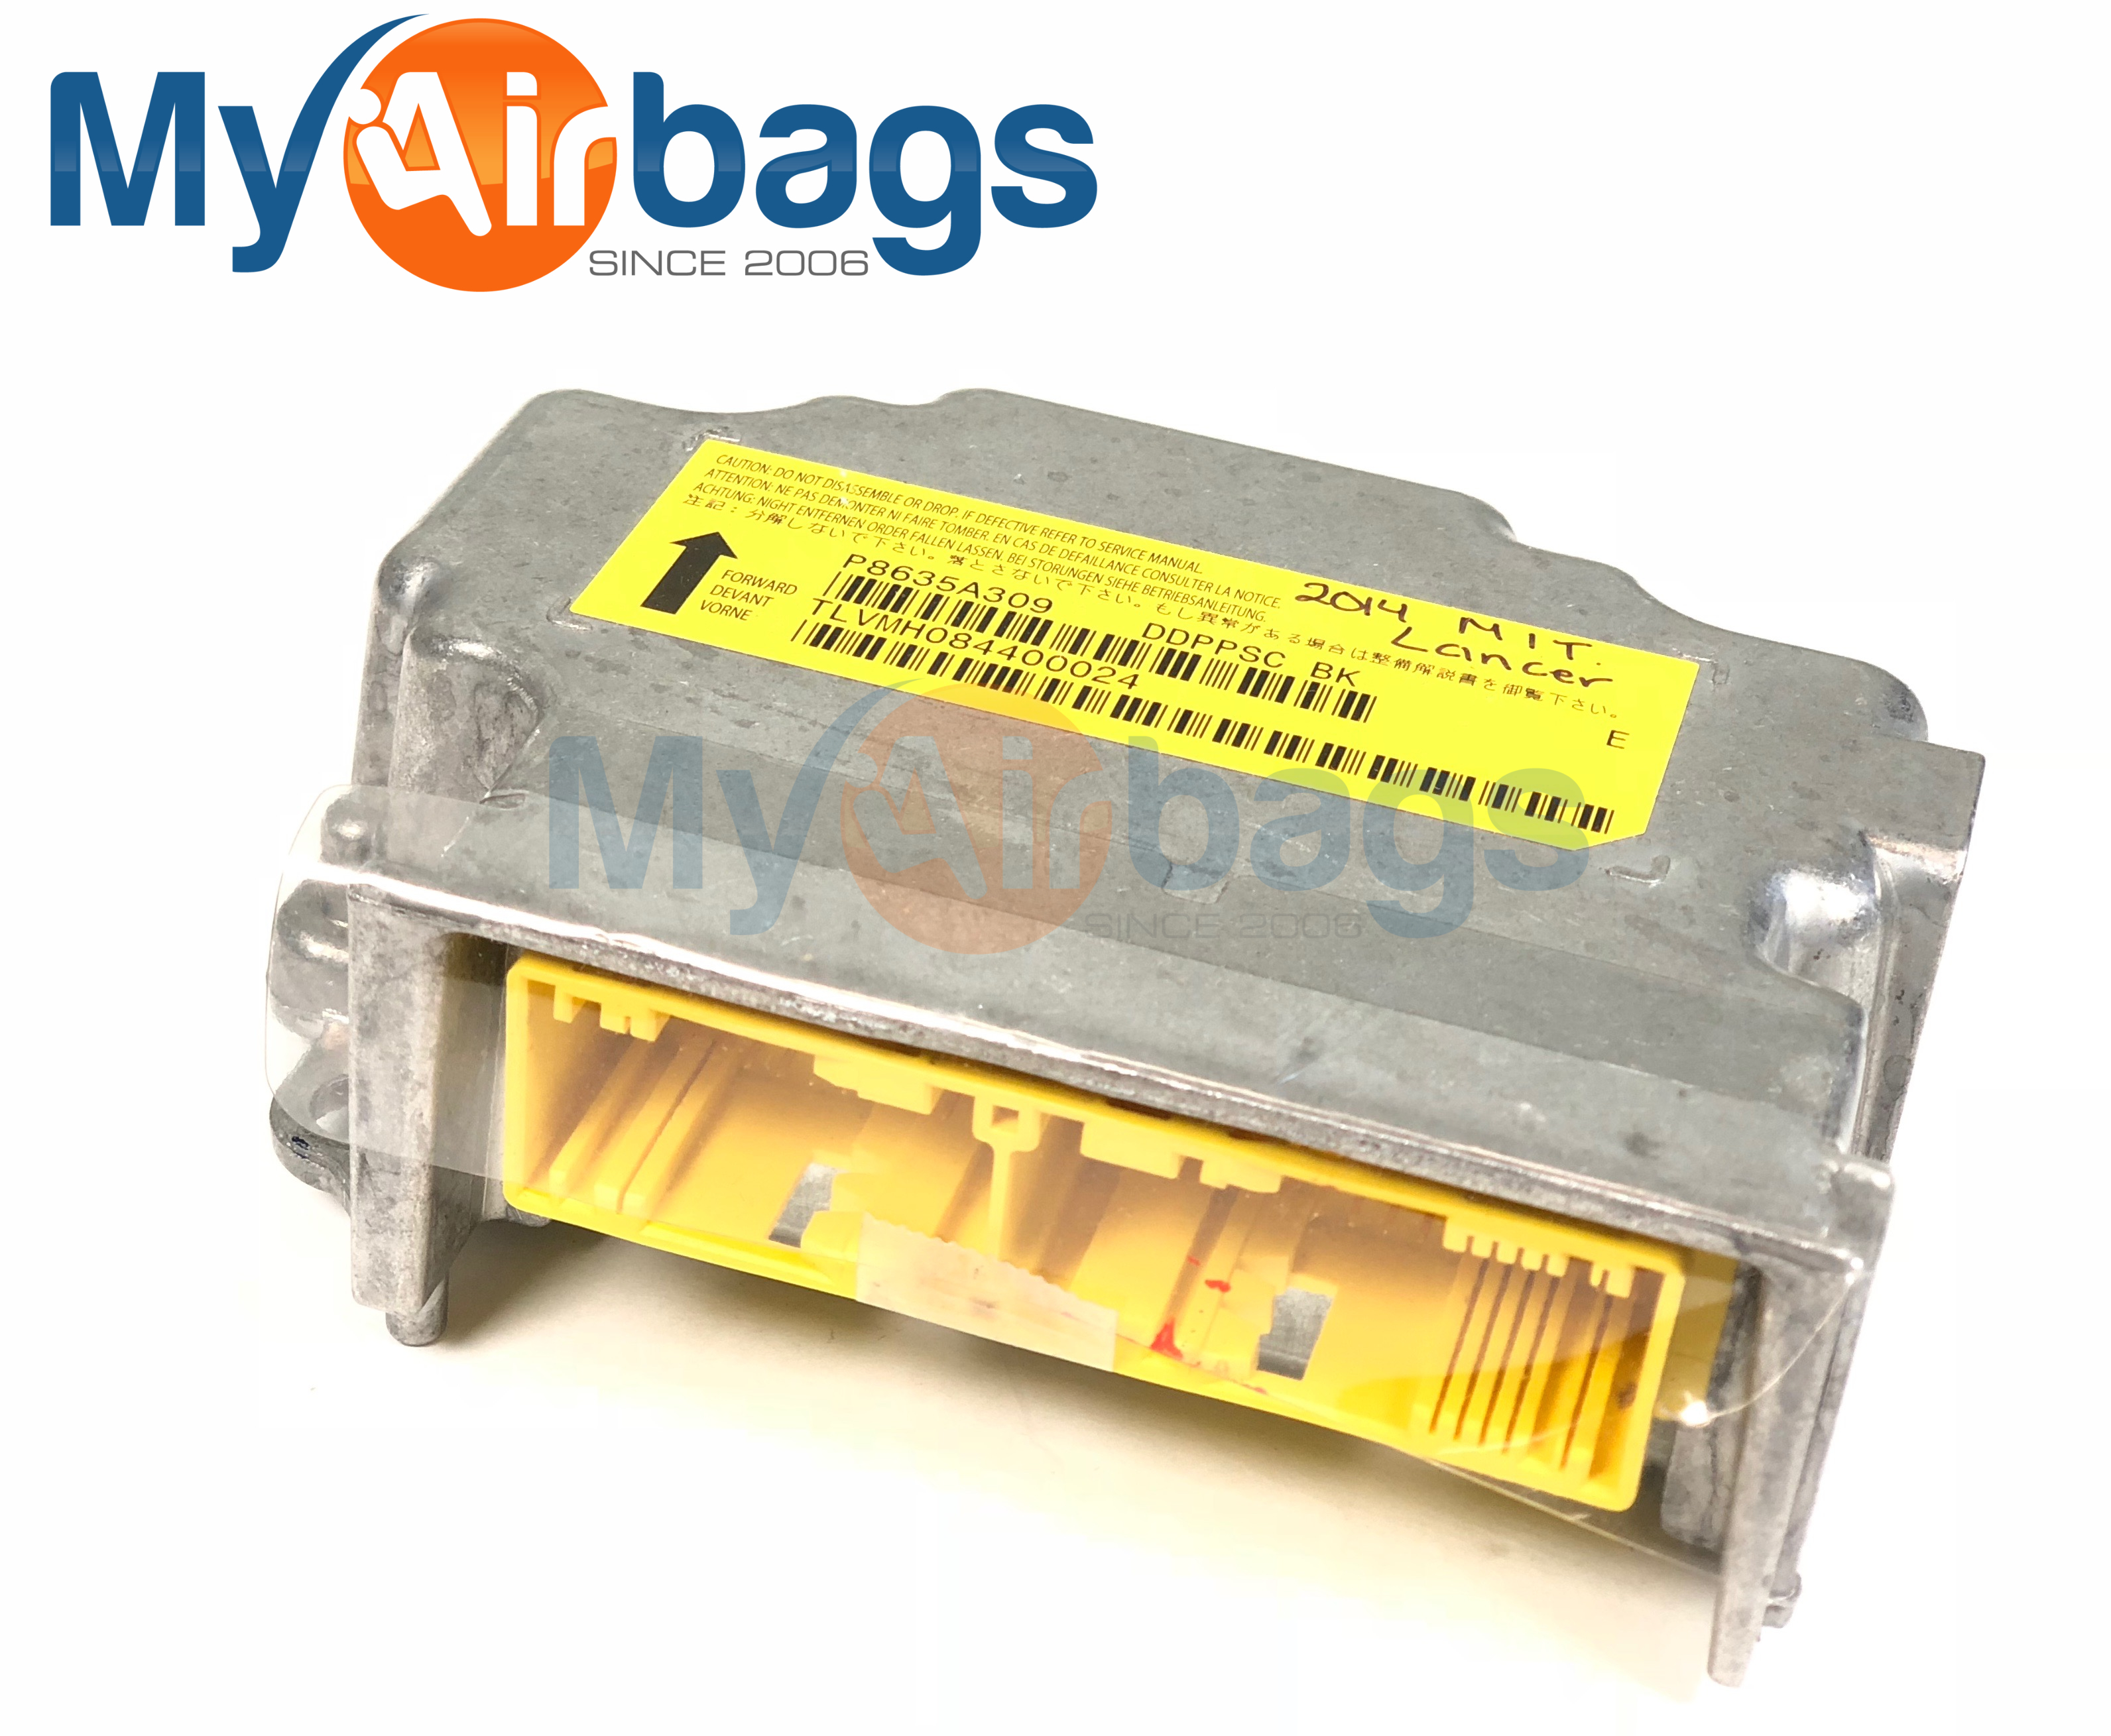 MITSUBISHI LANCER SRS Airbag Computer Diagnostic Control Module PART #P8635A309